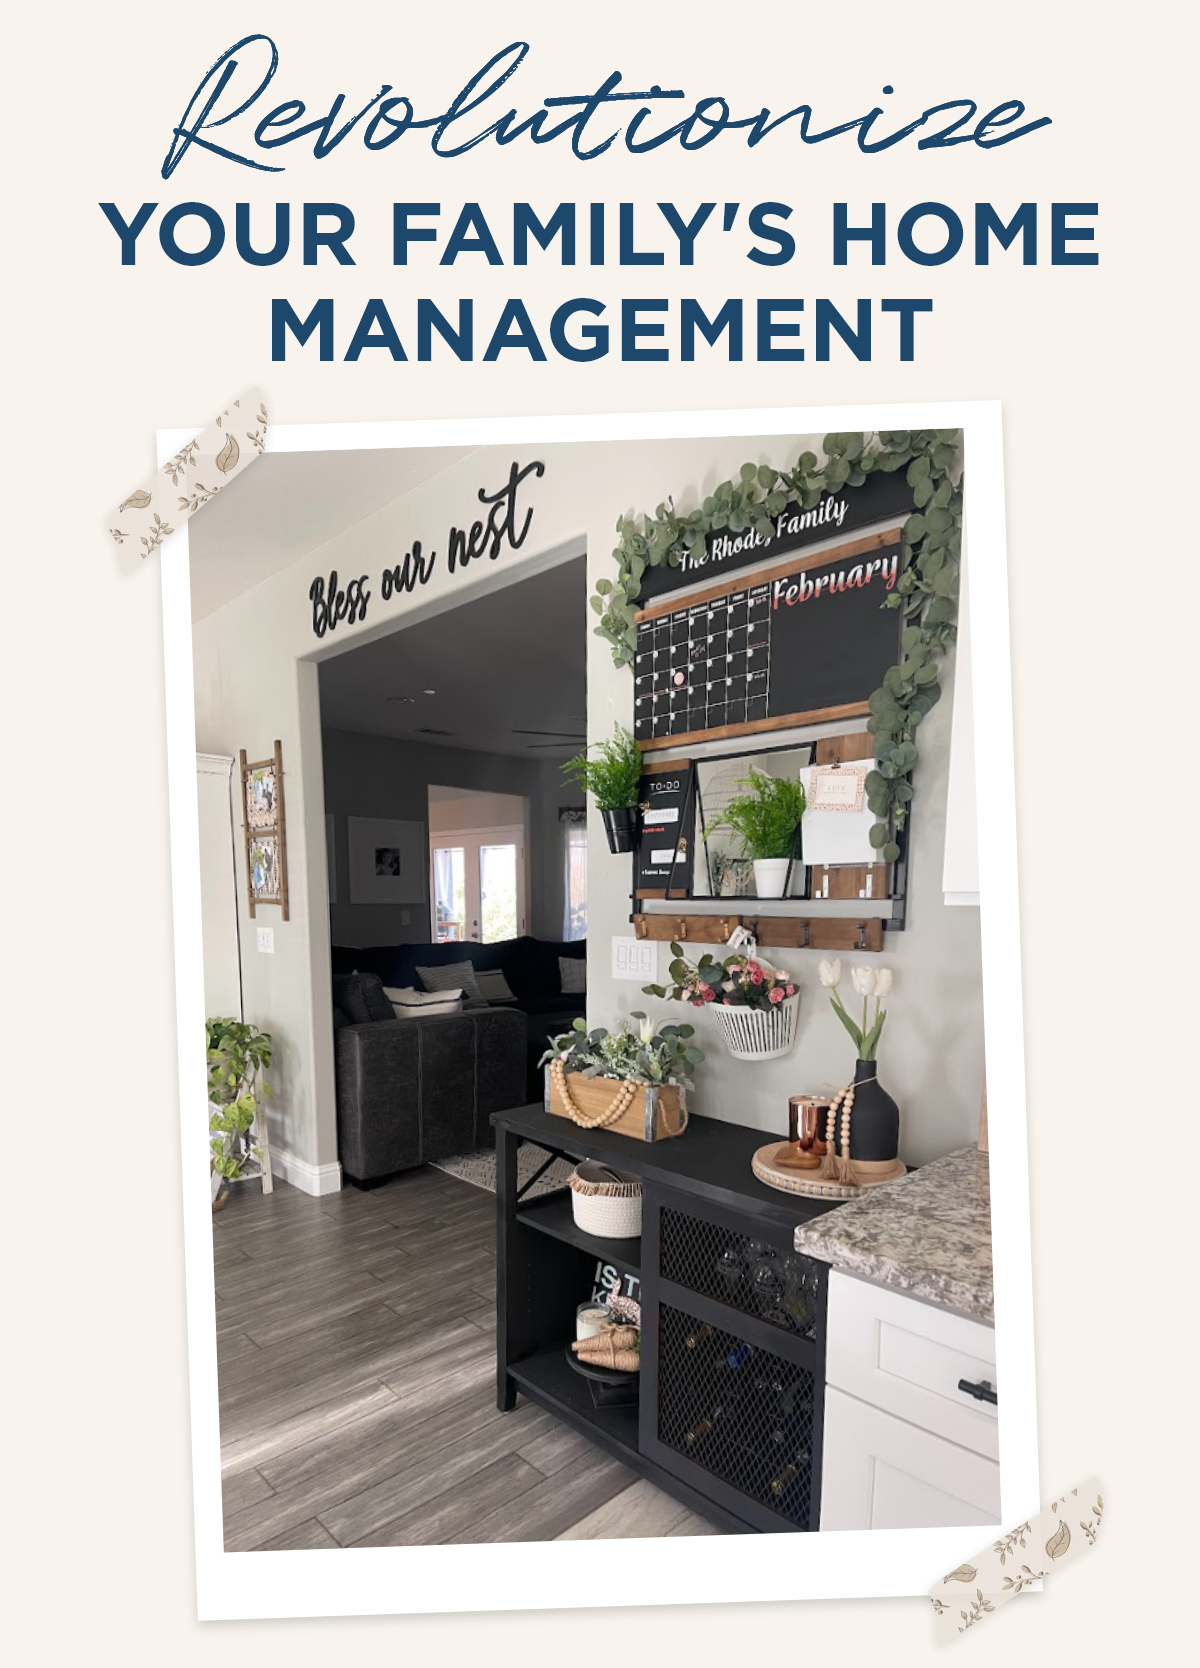 Revolutionize Your Family's Home Management